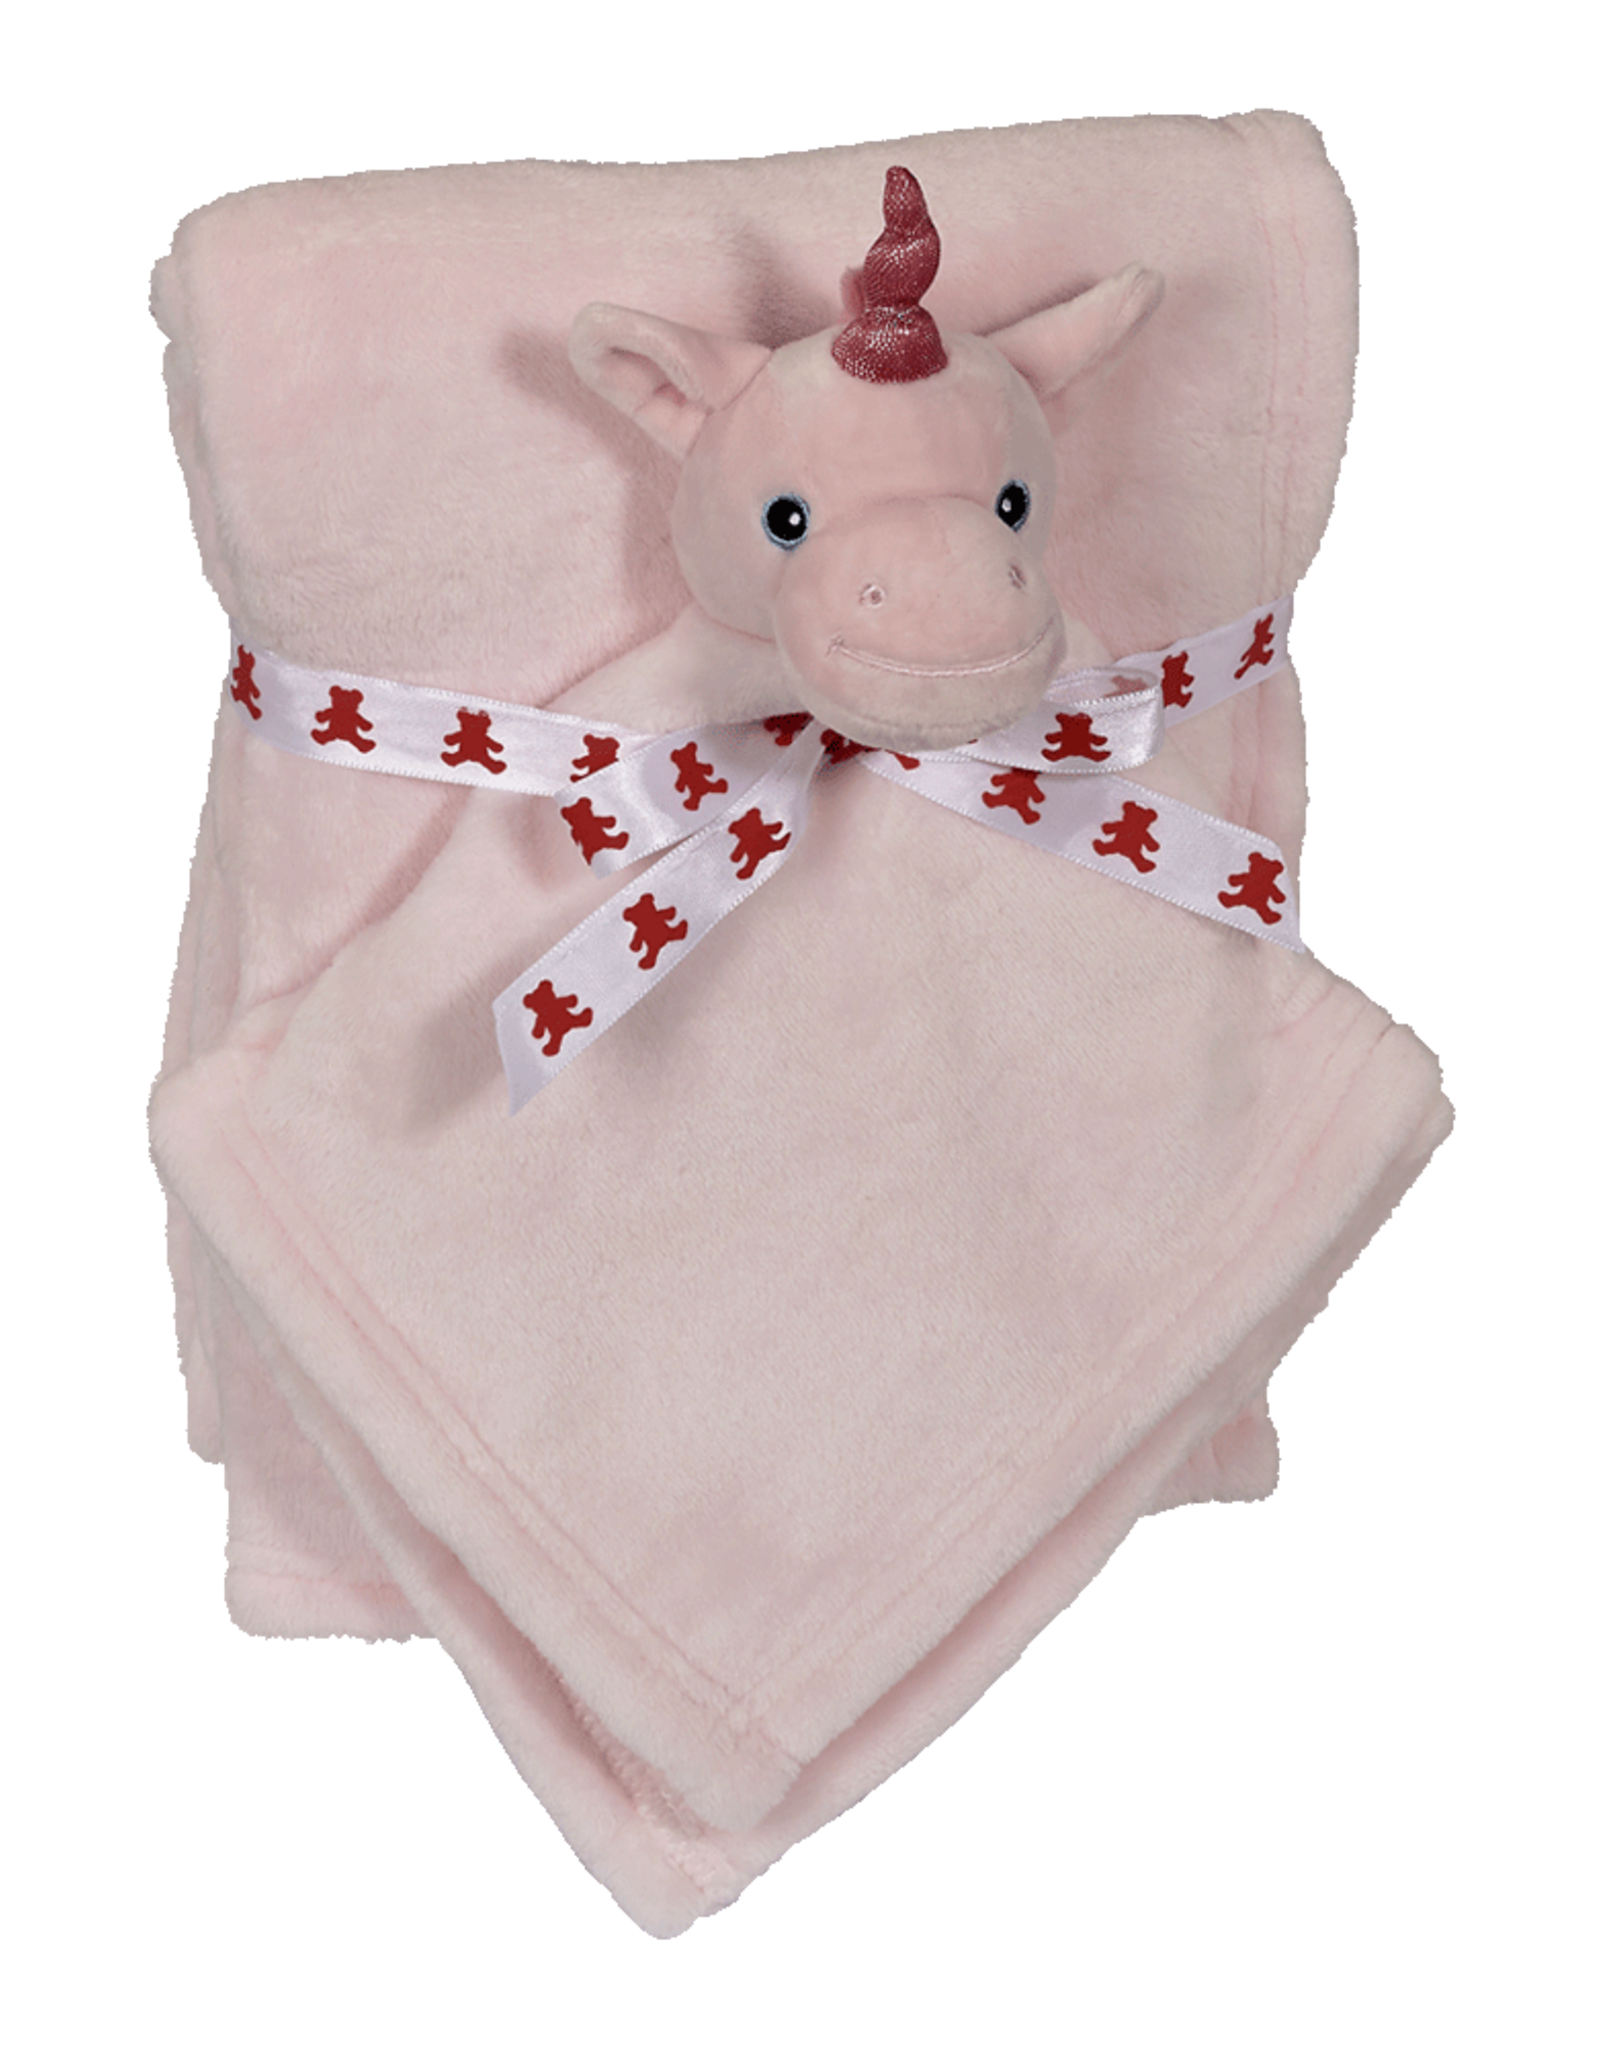 Pink unicorn blanket set